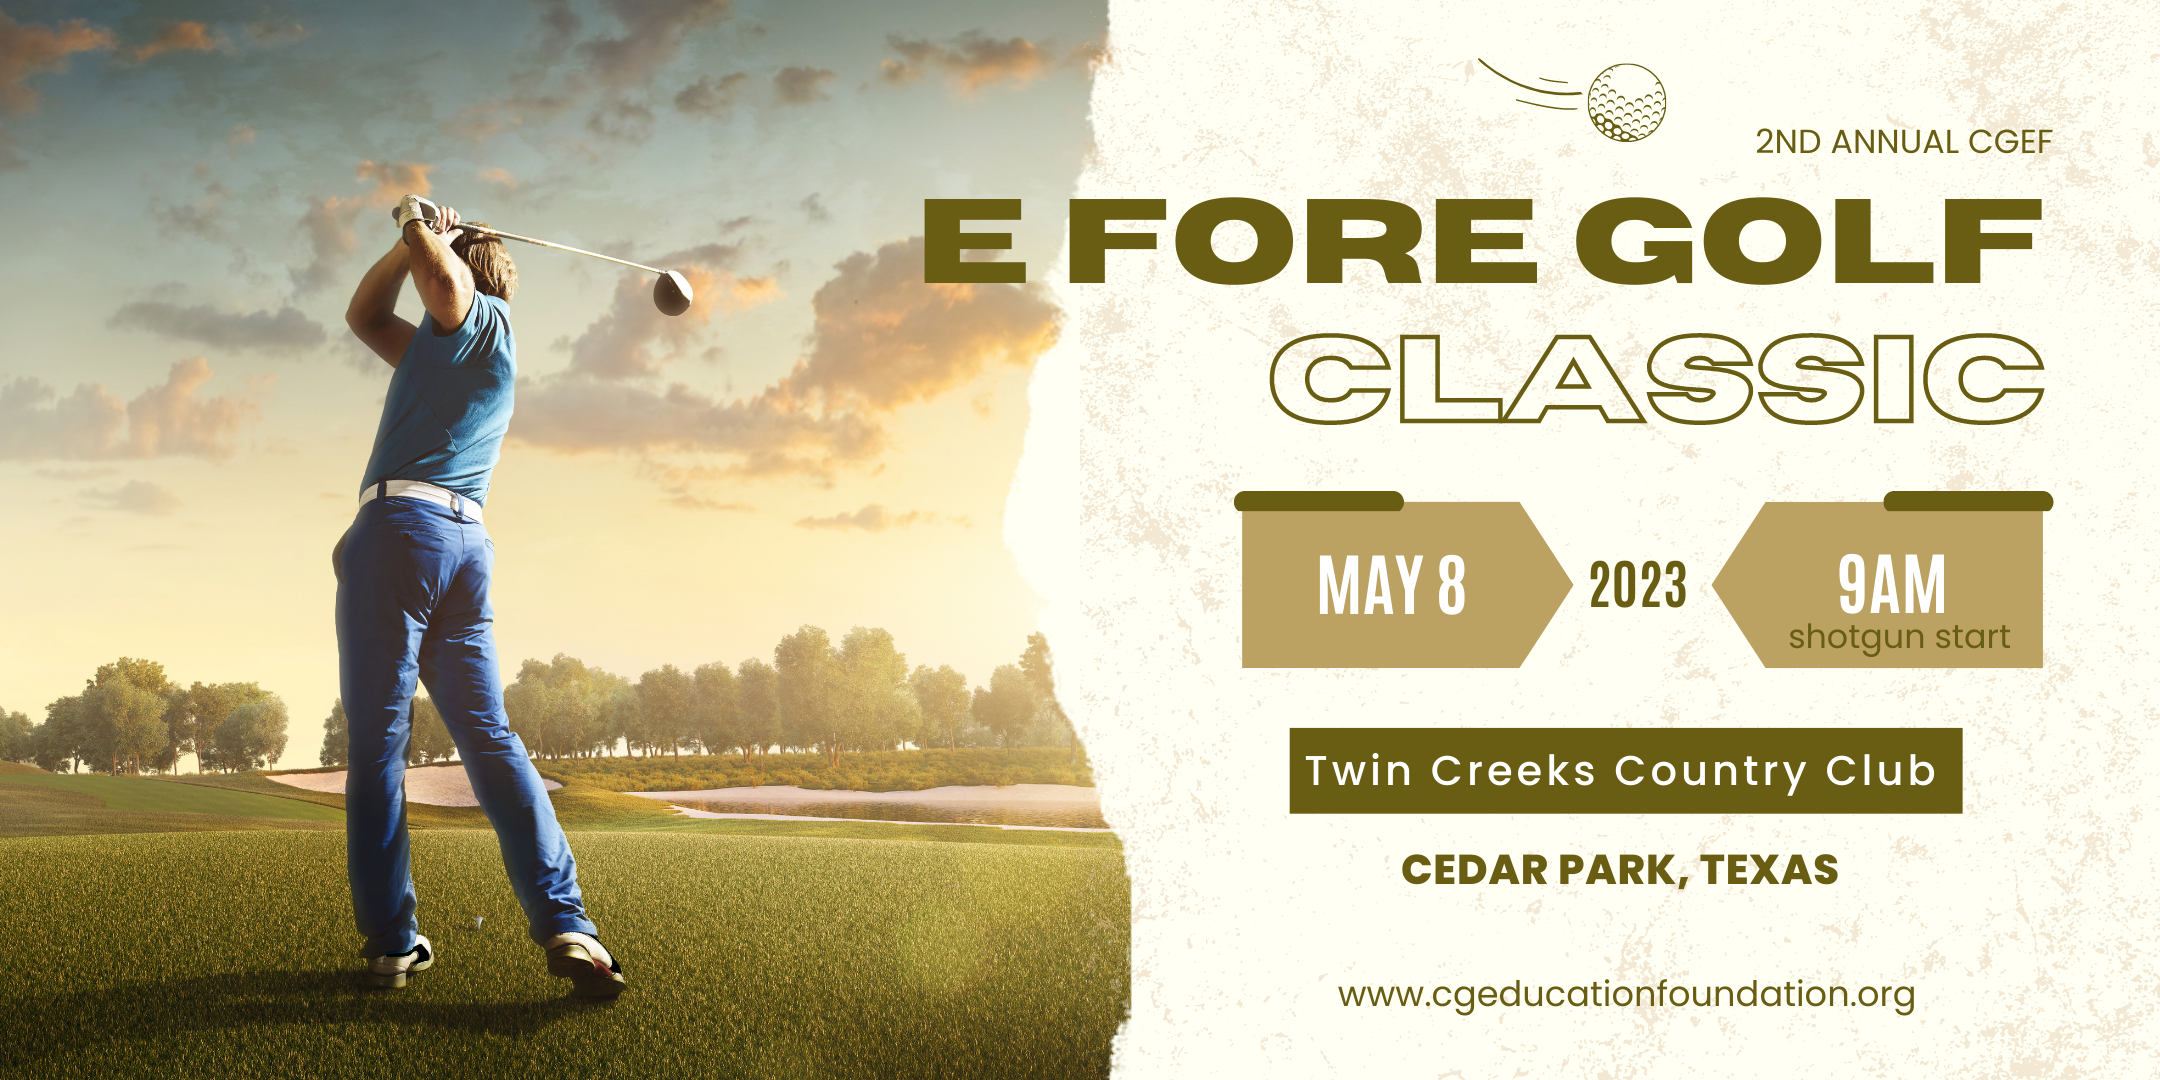 2nd Annual E Fore Golf Classic